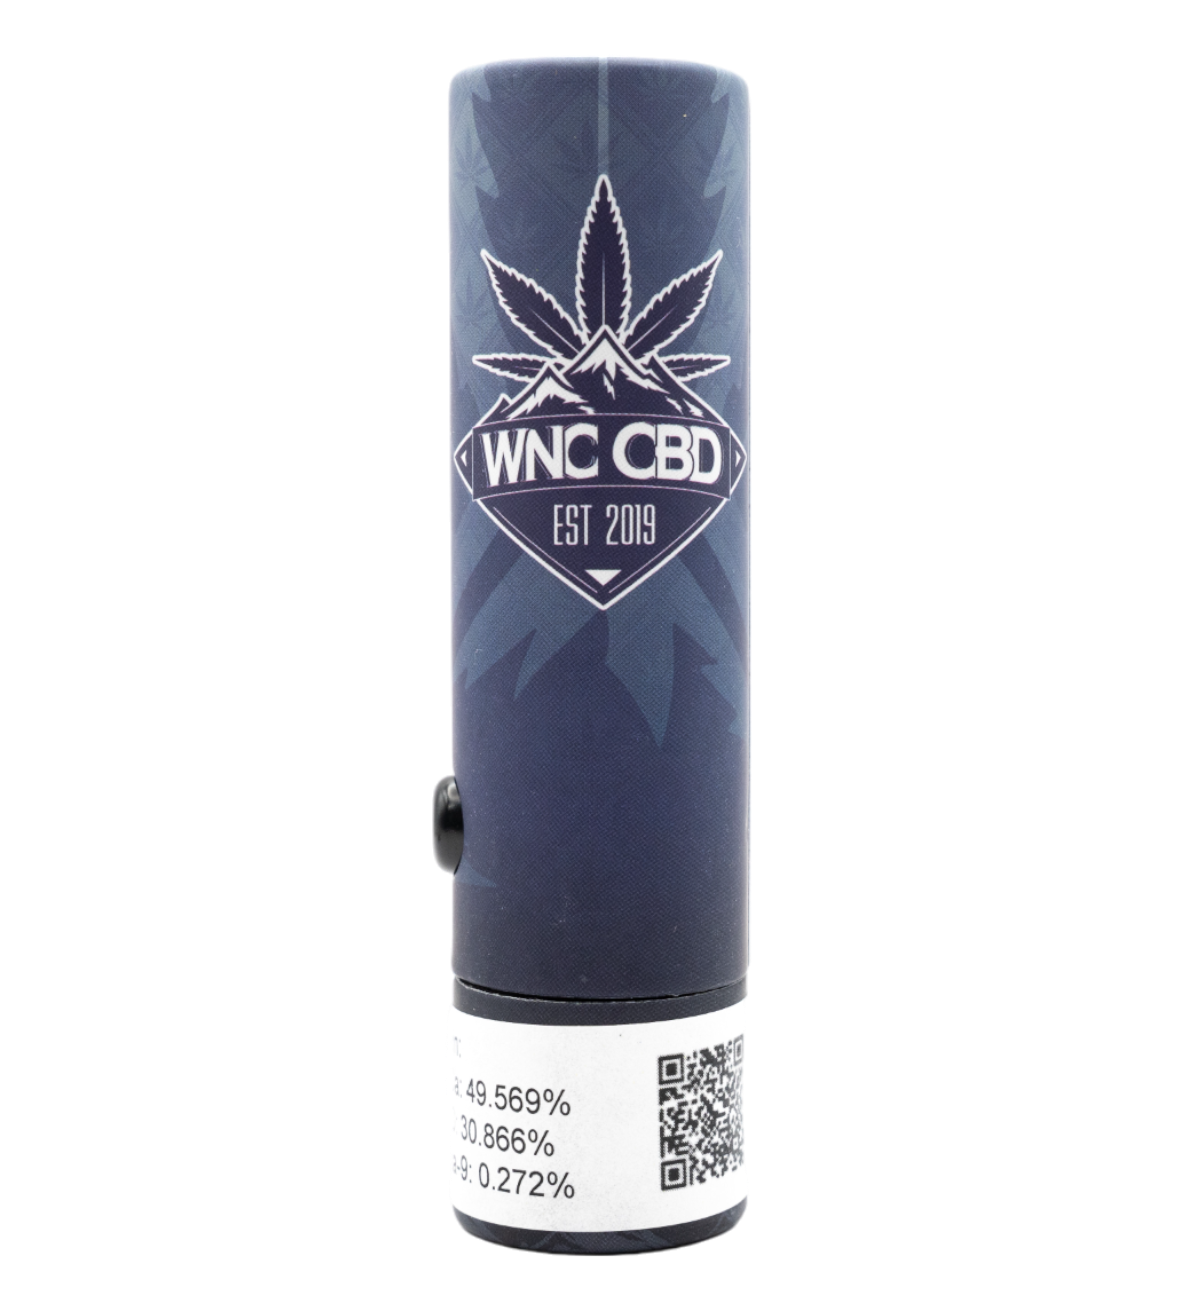 wnc cbd vape cartridge packaging